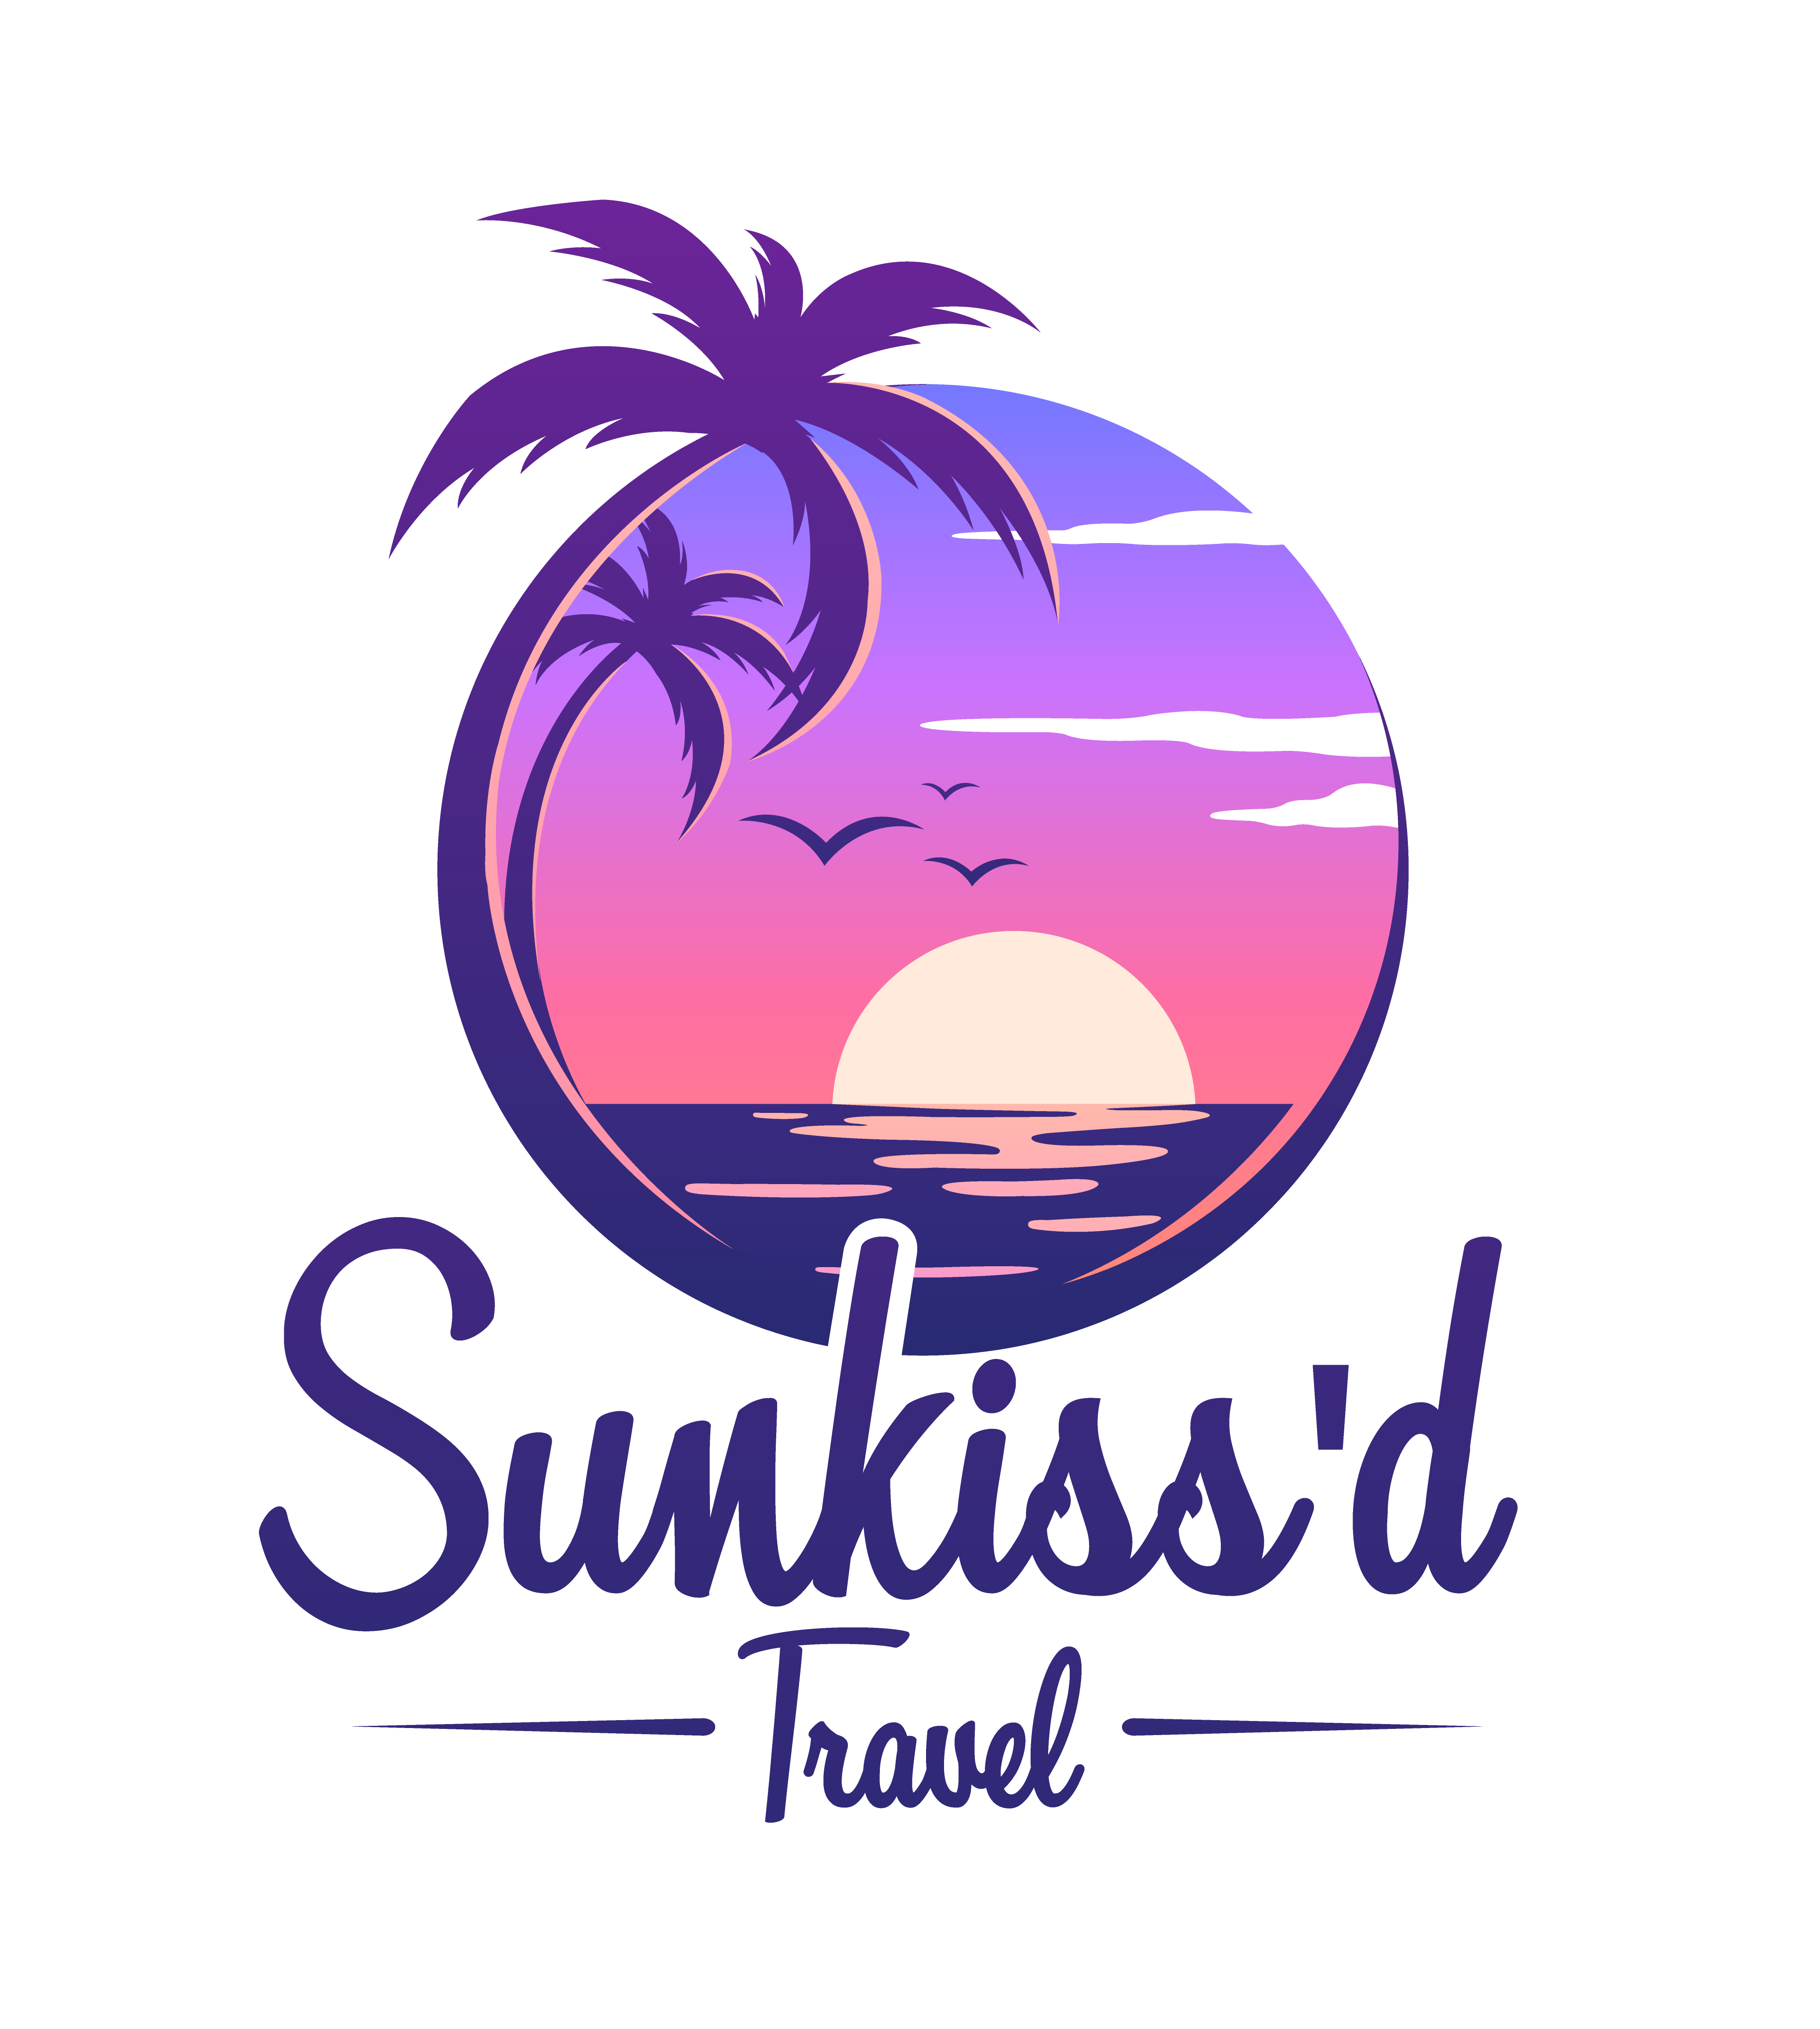 Sunkiss'd Travel